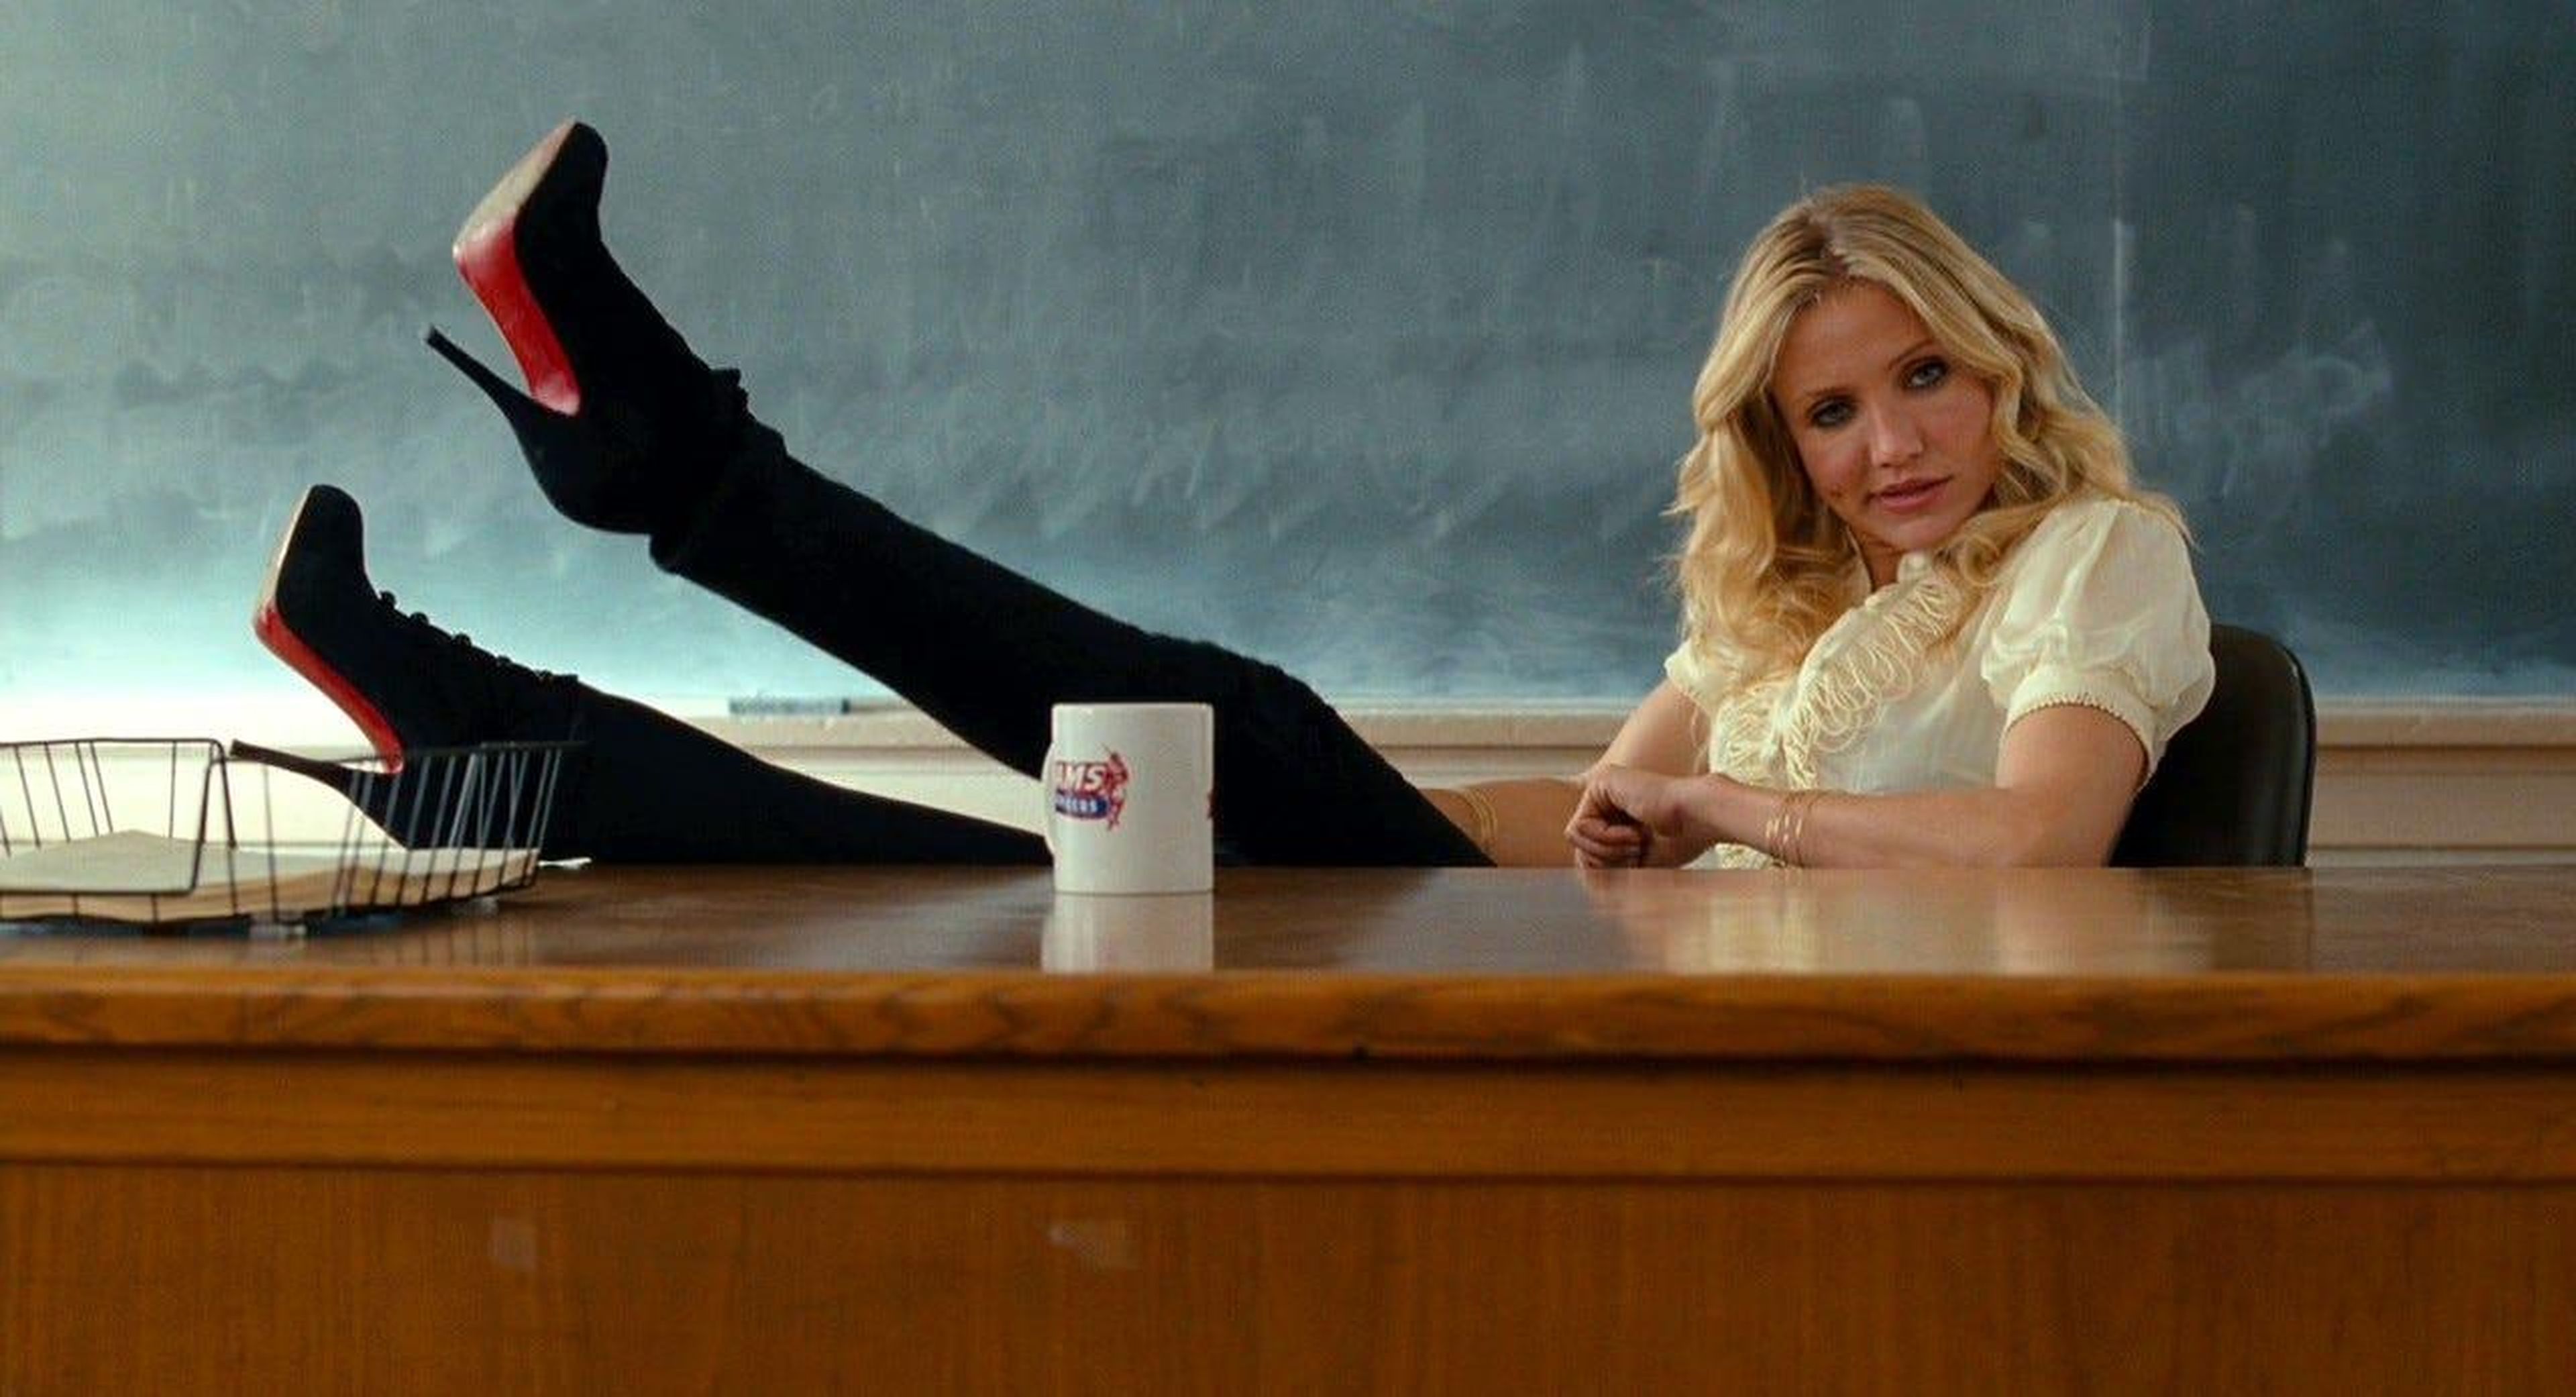 13. Cameron Diaz as Elizabeth Halsey in "Bad Teacher"